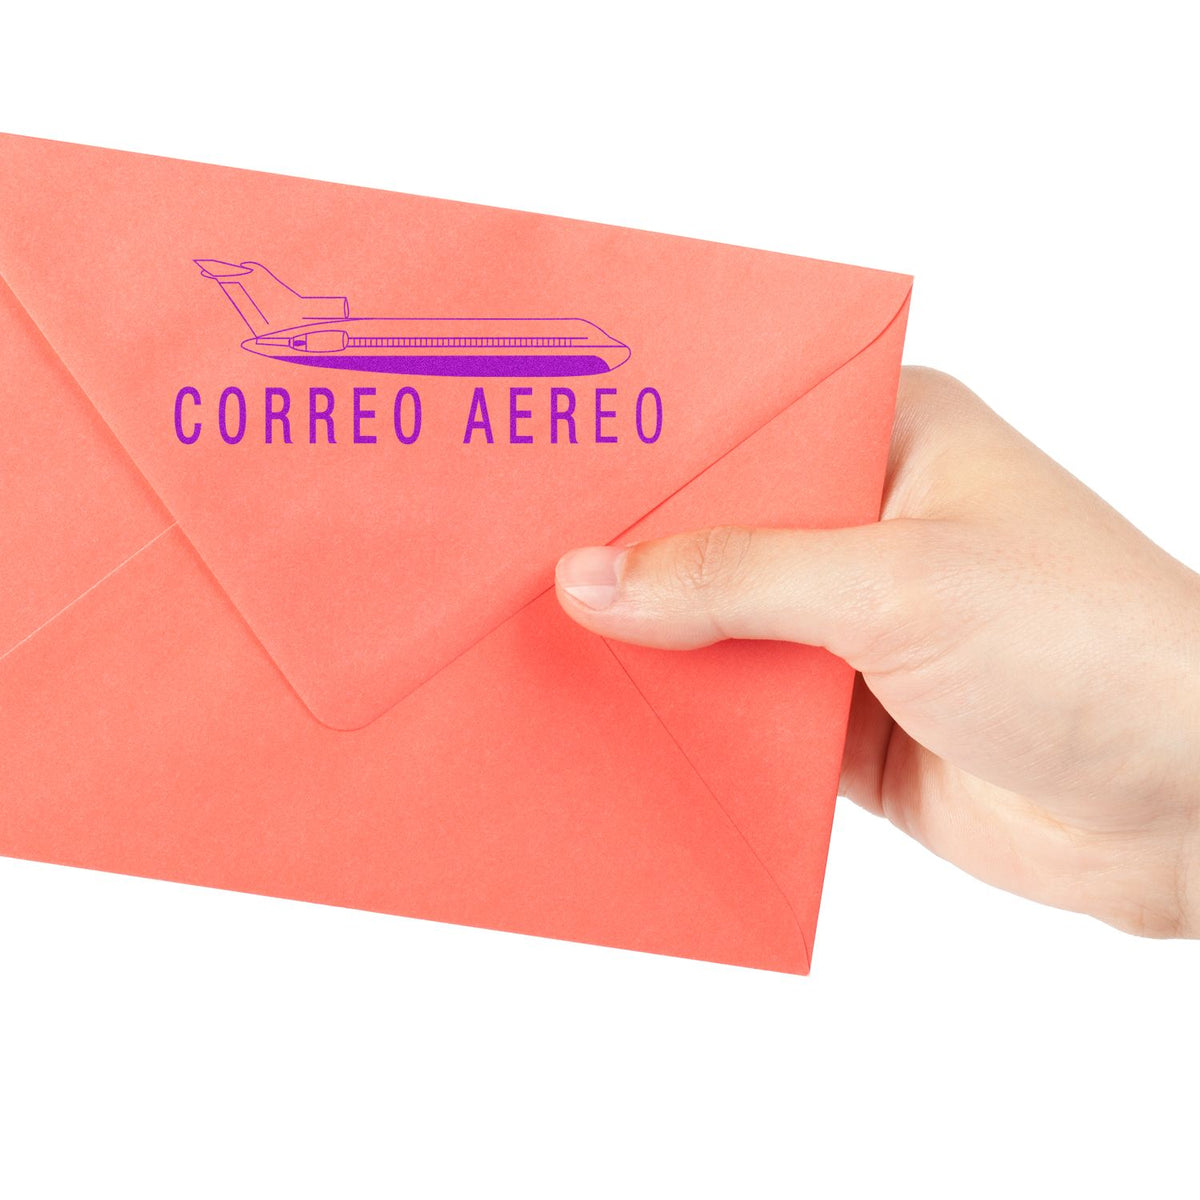 Correo Aero Rubber Stamp In Use